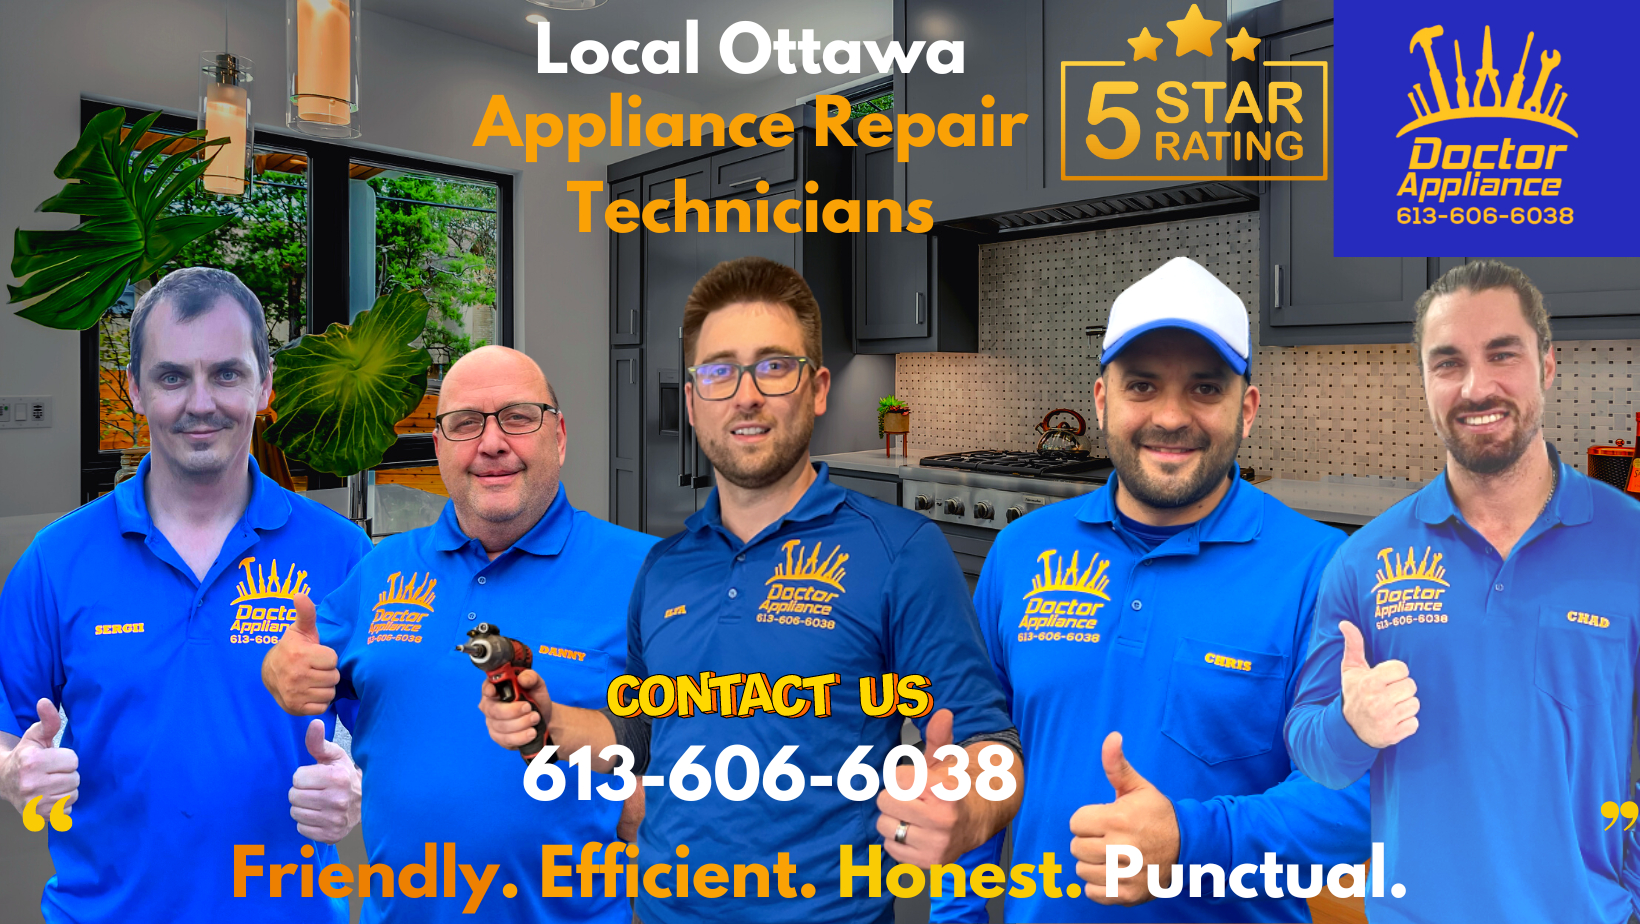 Ottawa appliance repair technicians doctor appliance repair ottawa technicians